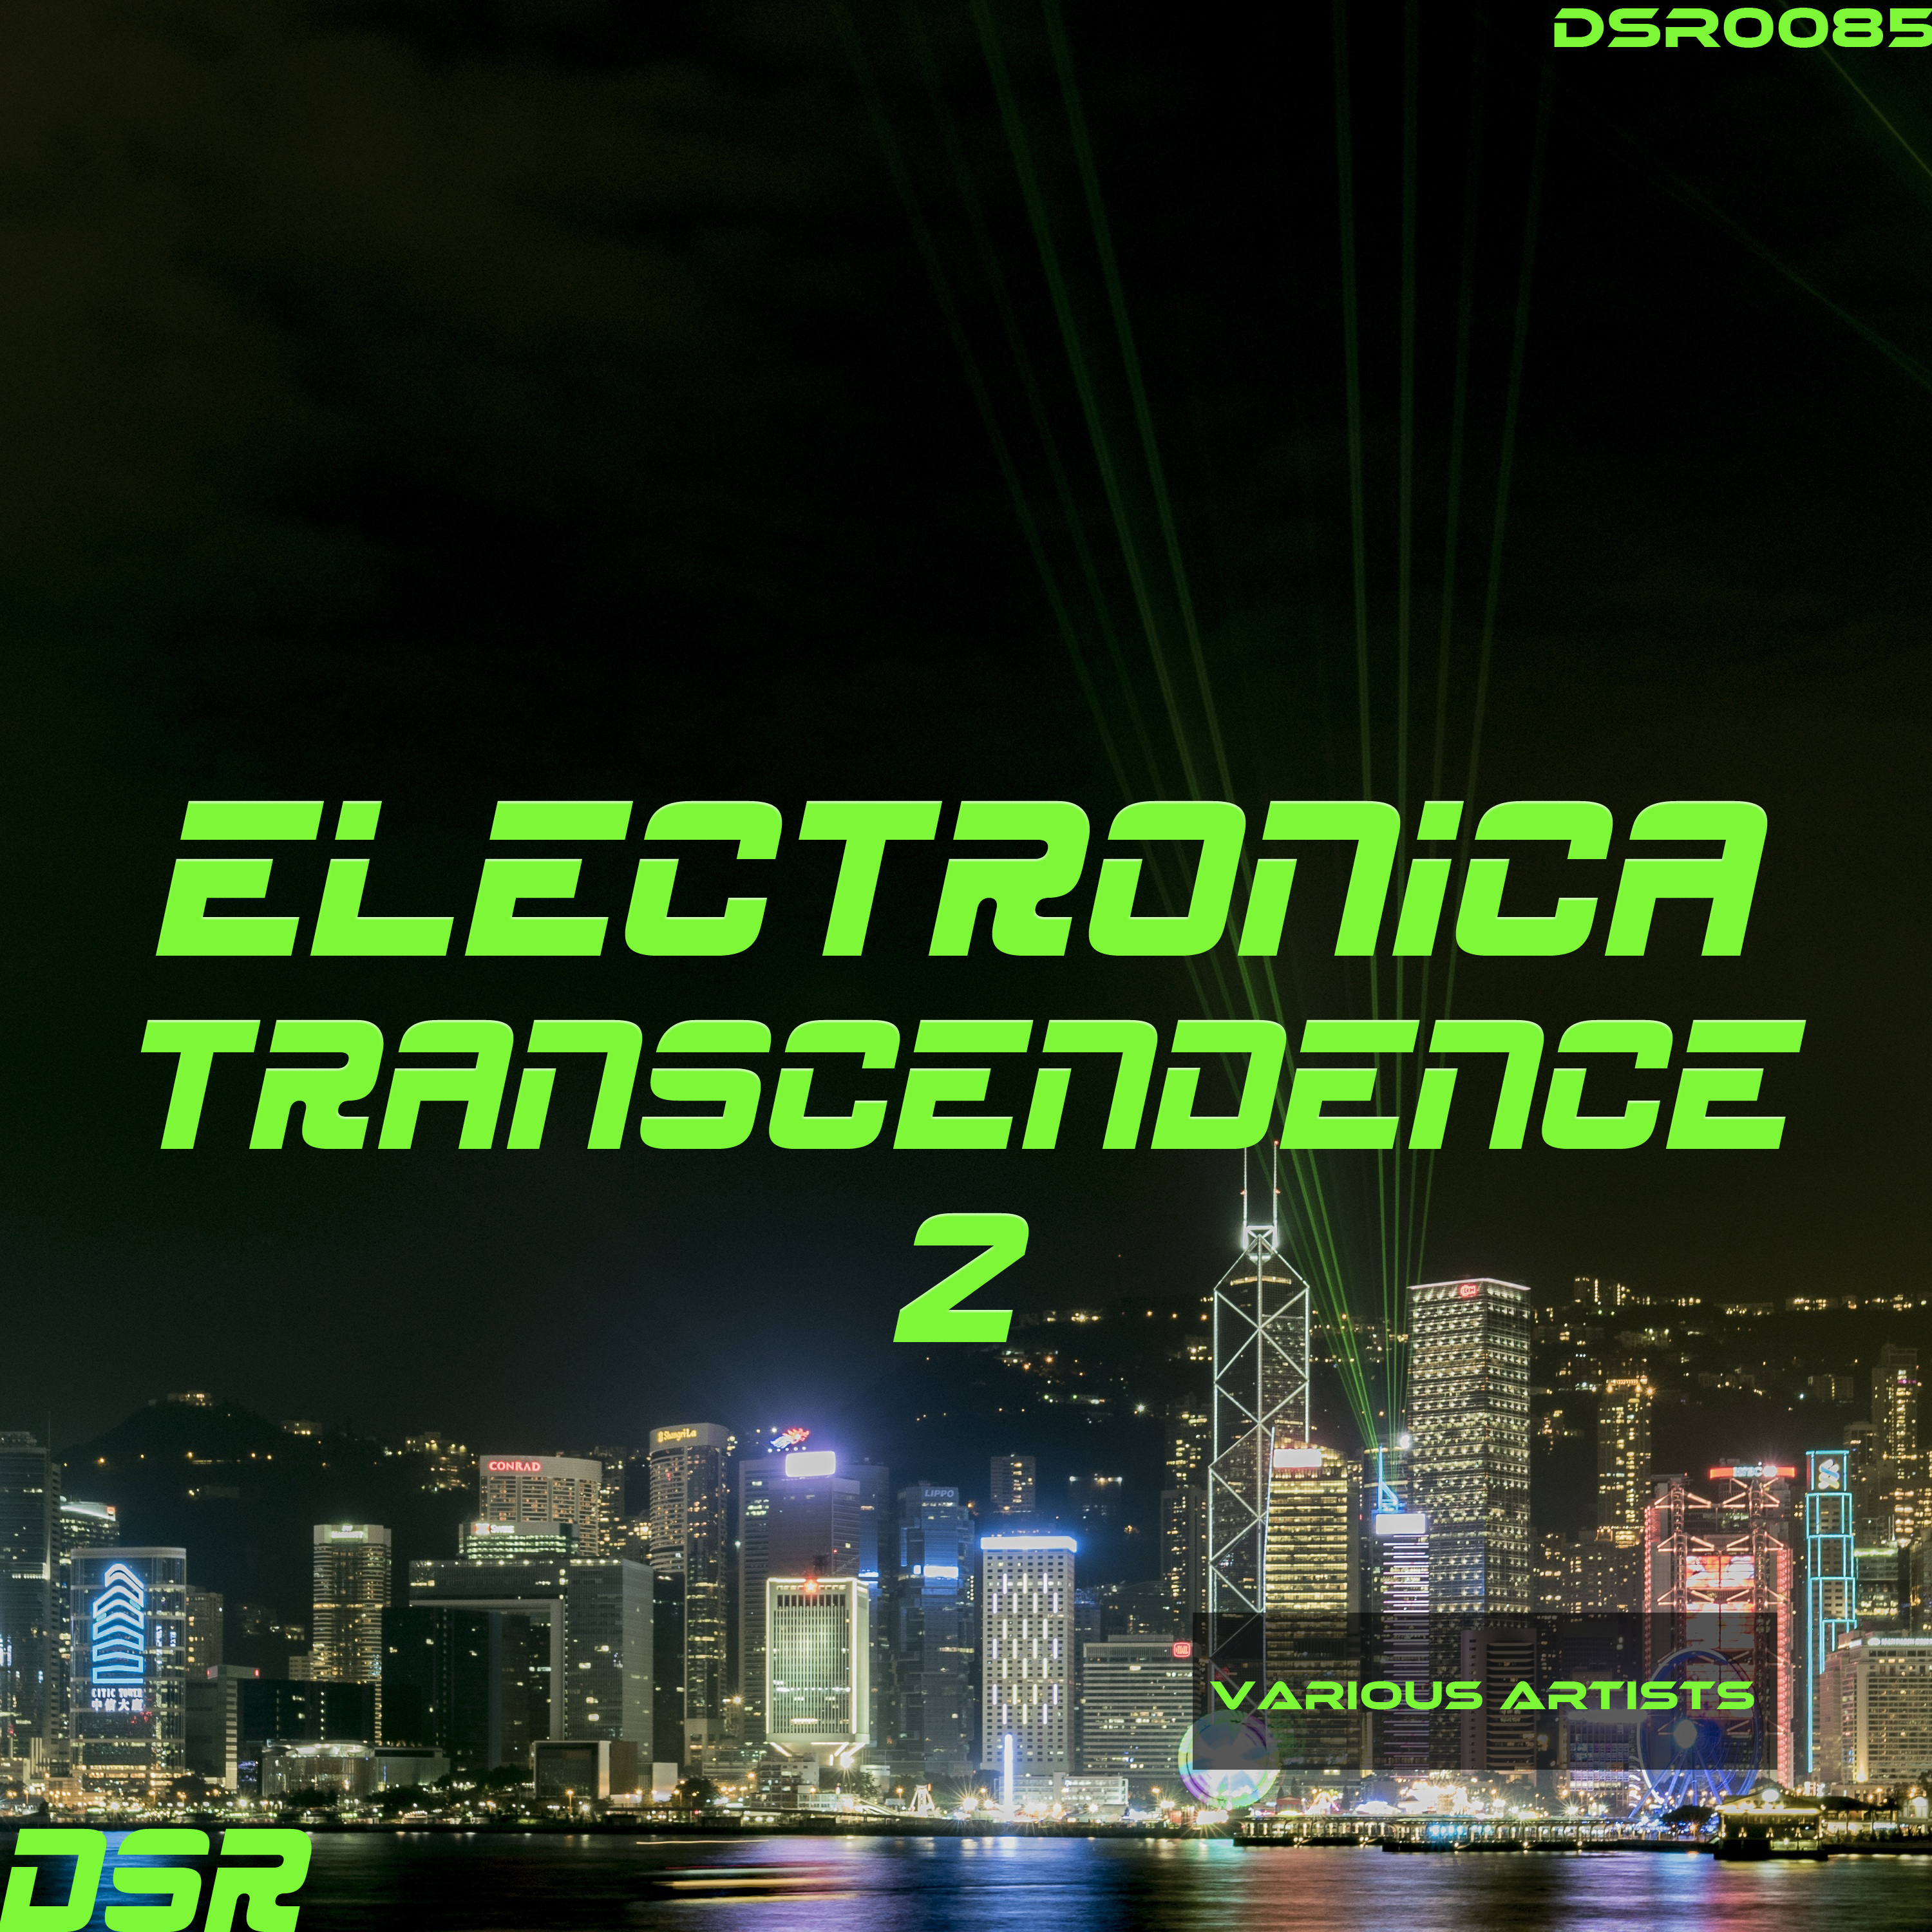 Electronica Transcendence, Vol. 2